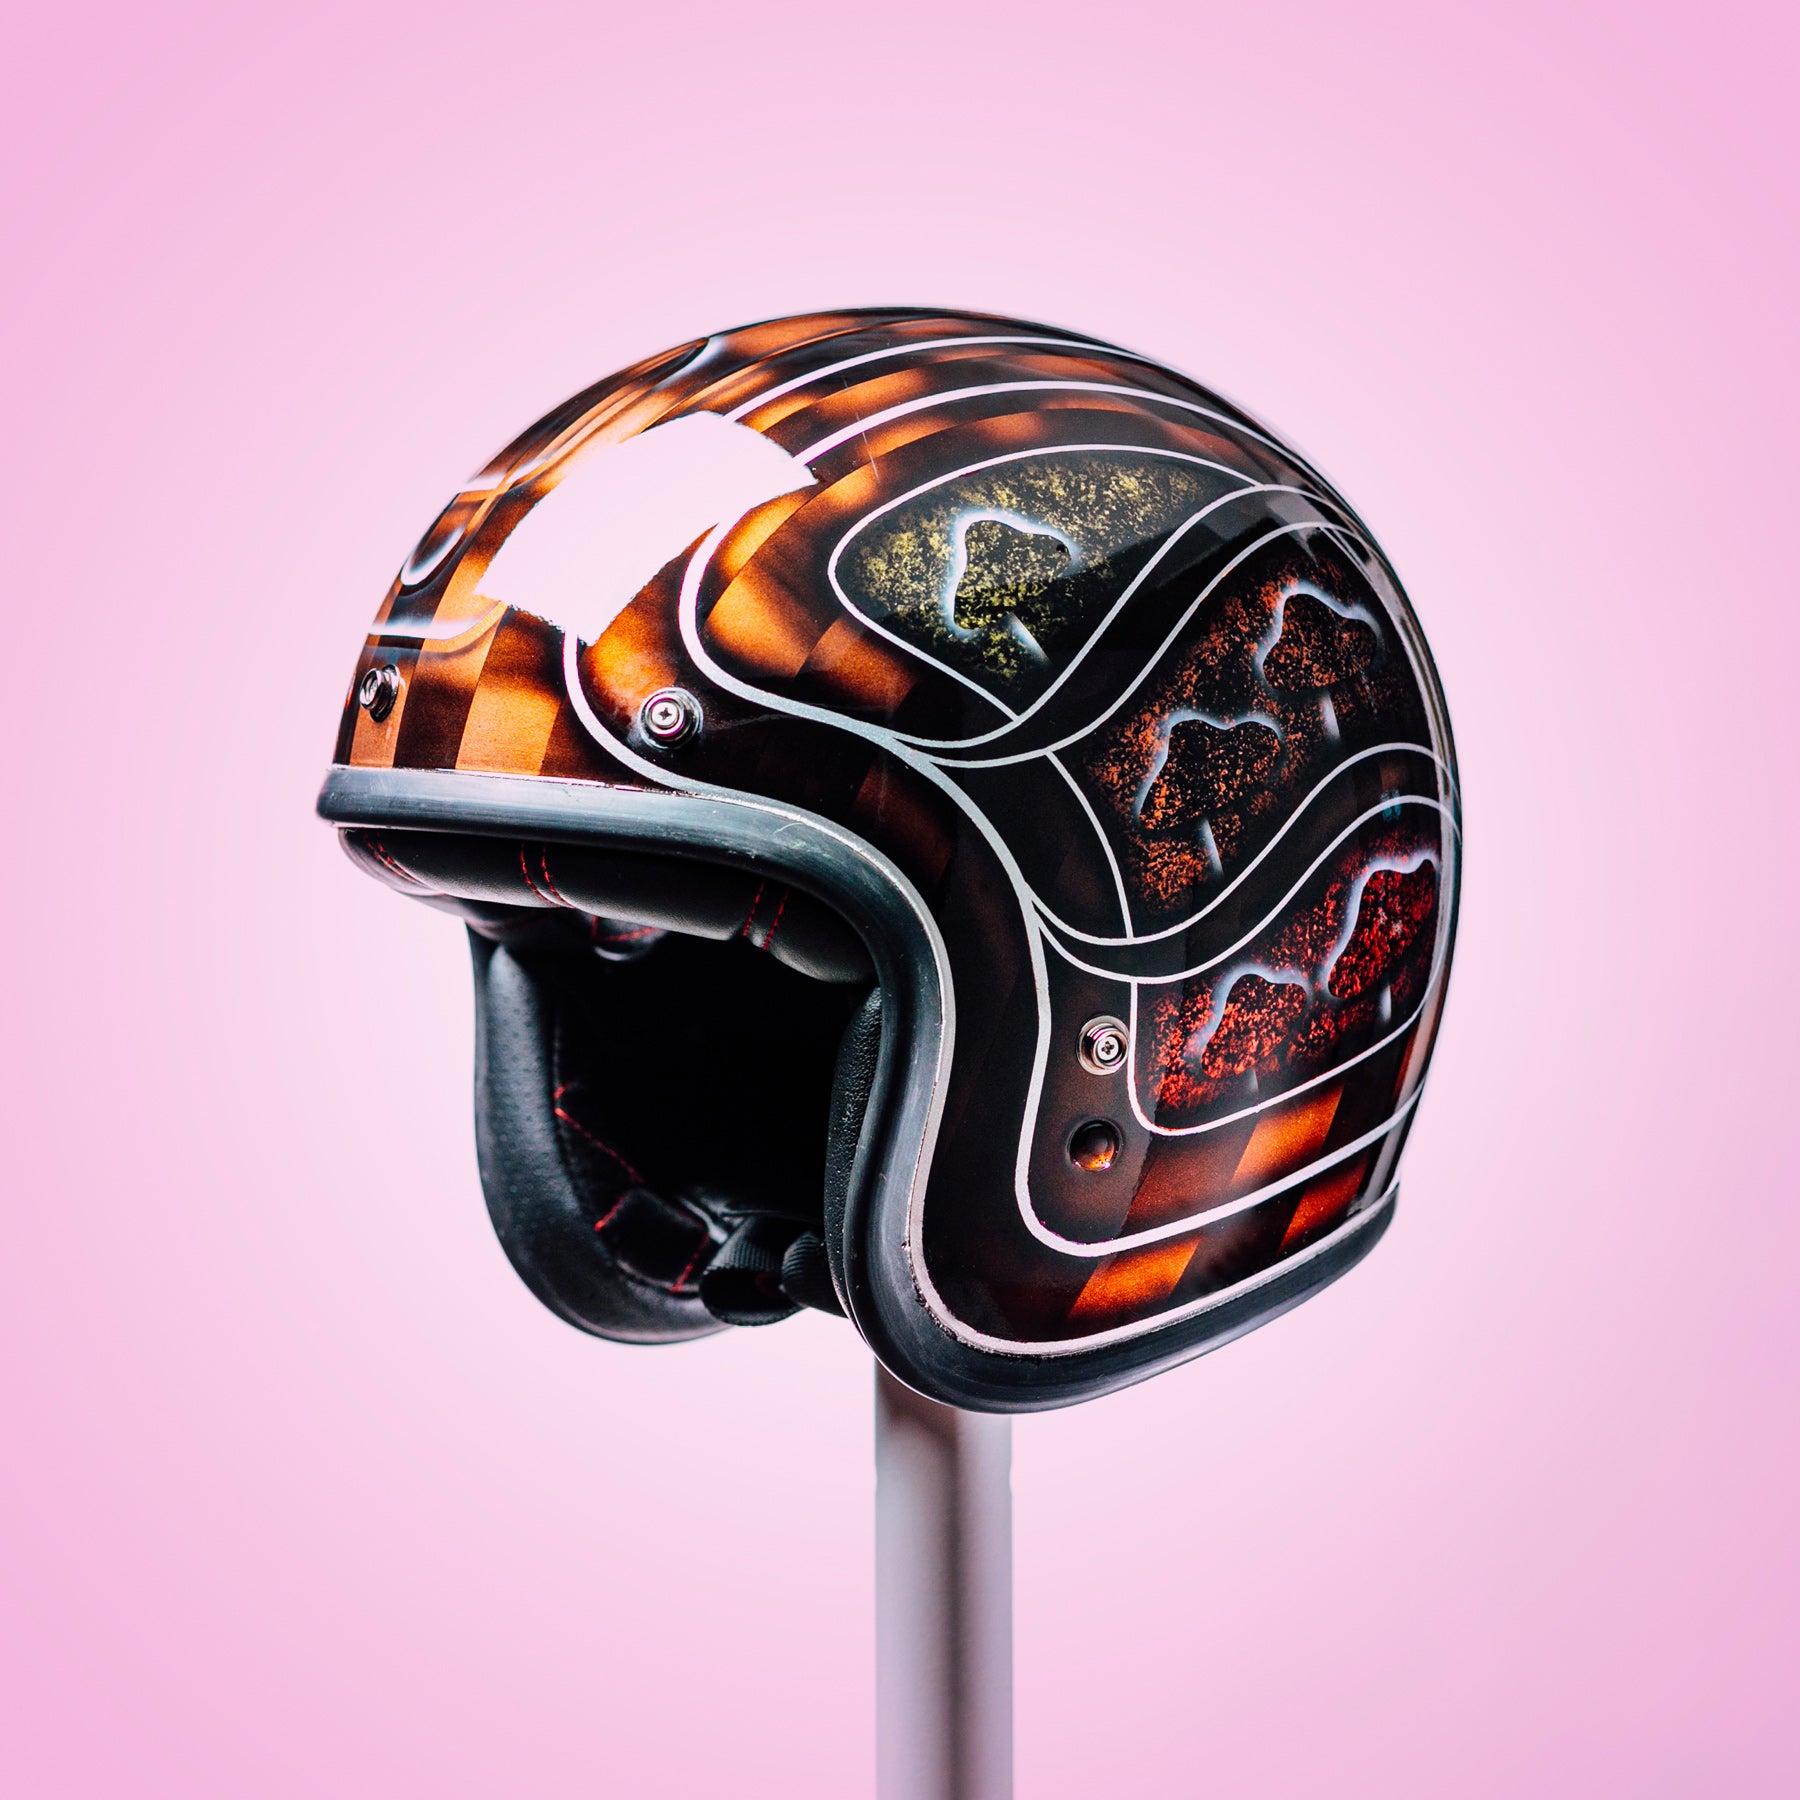 Trippy Ten Helmet Art Show Pittsburgh Johnny A. Harris Kustom Paint